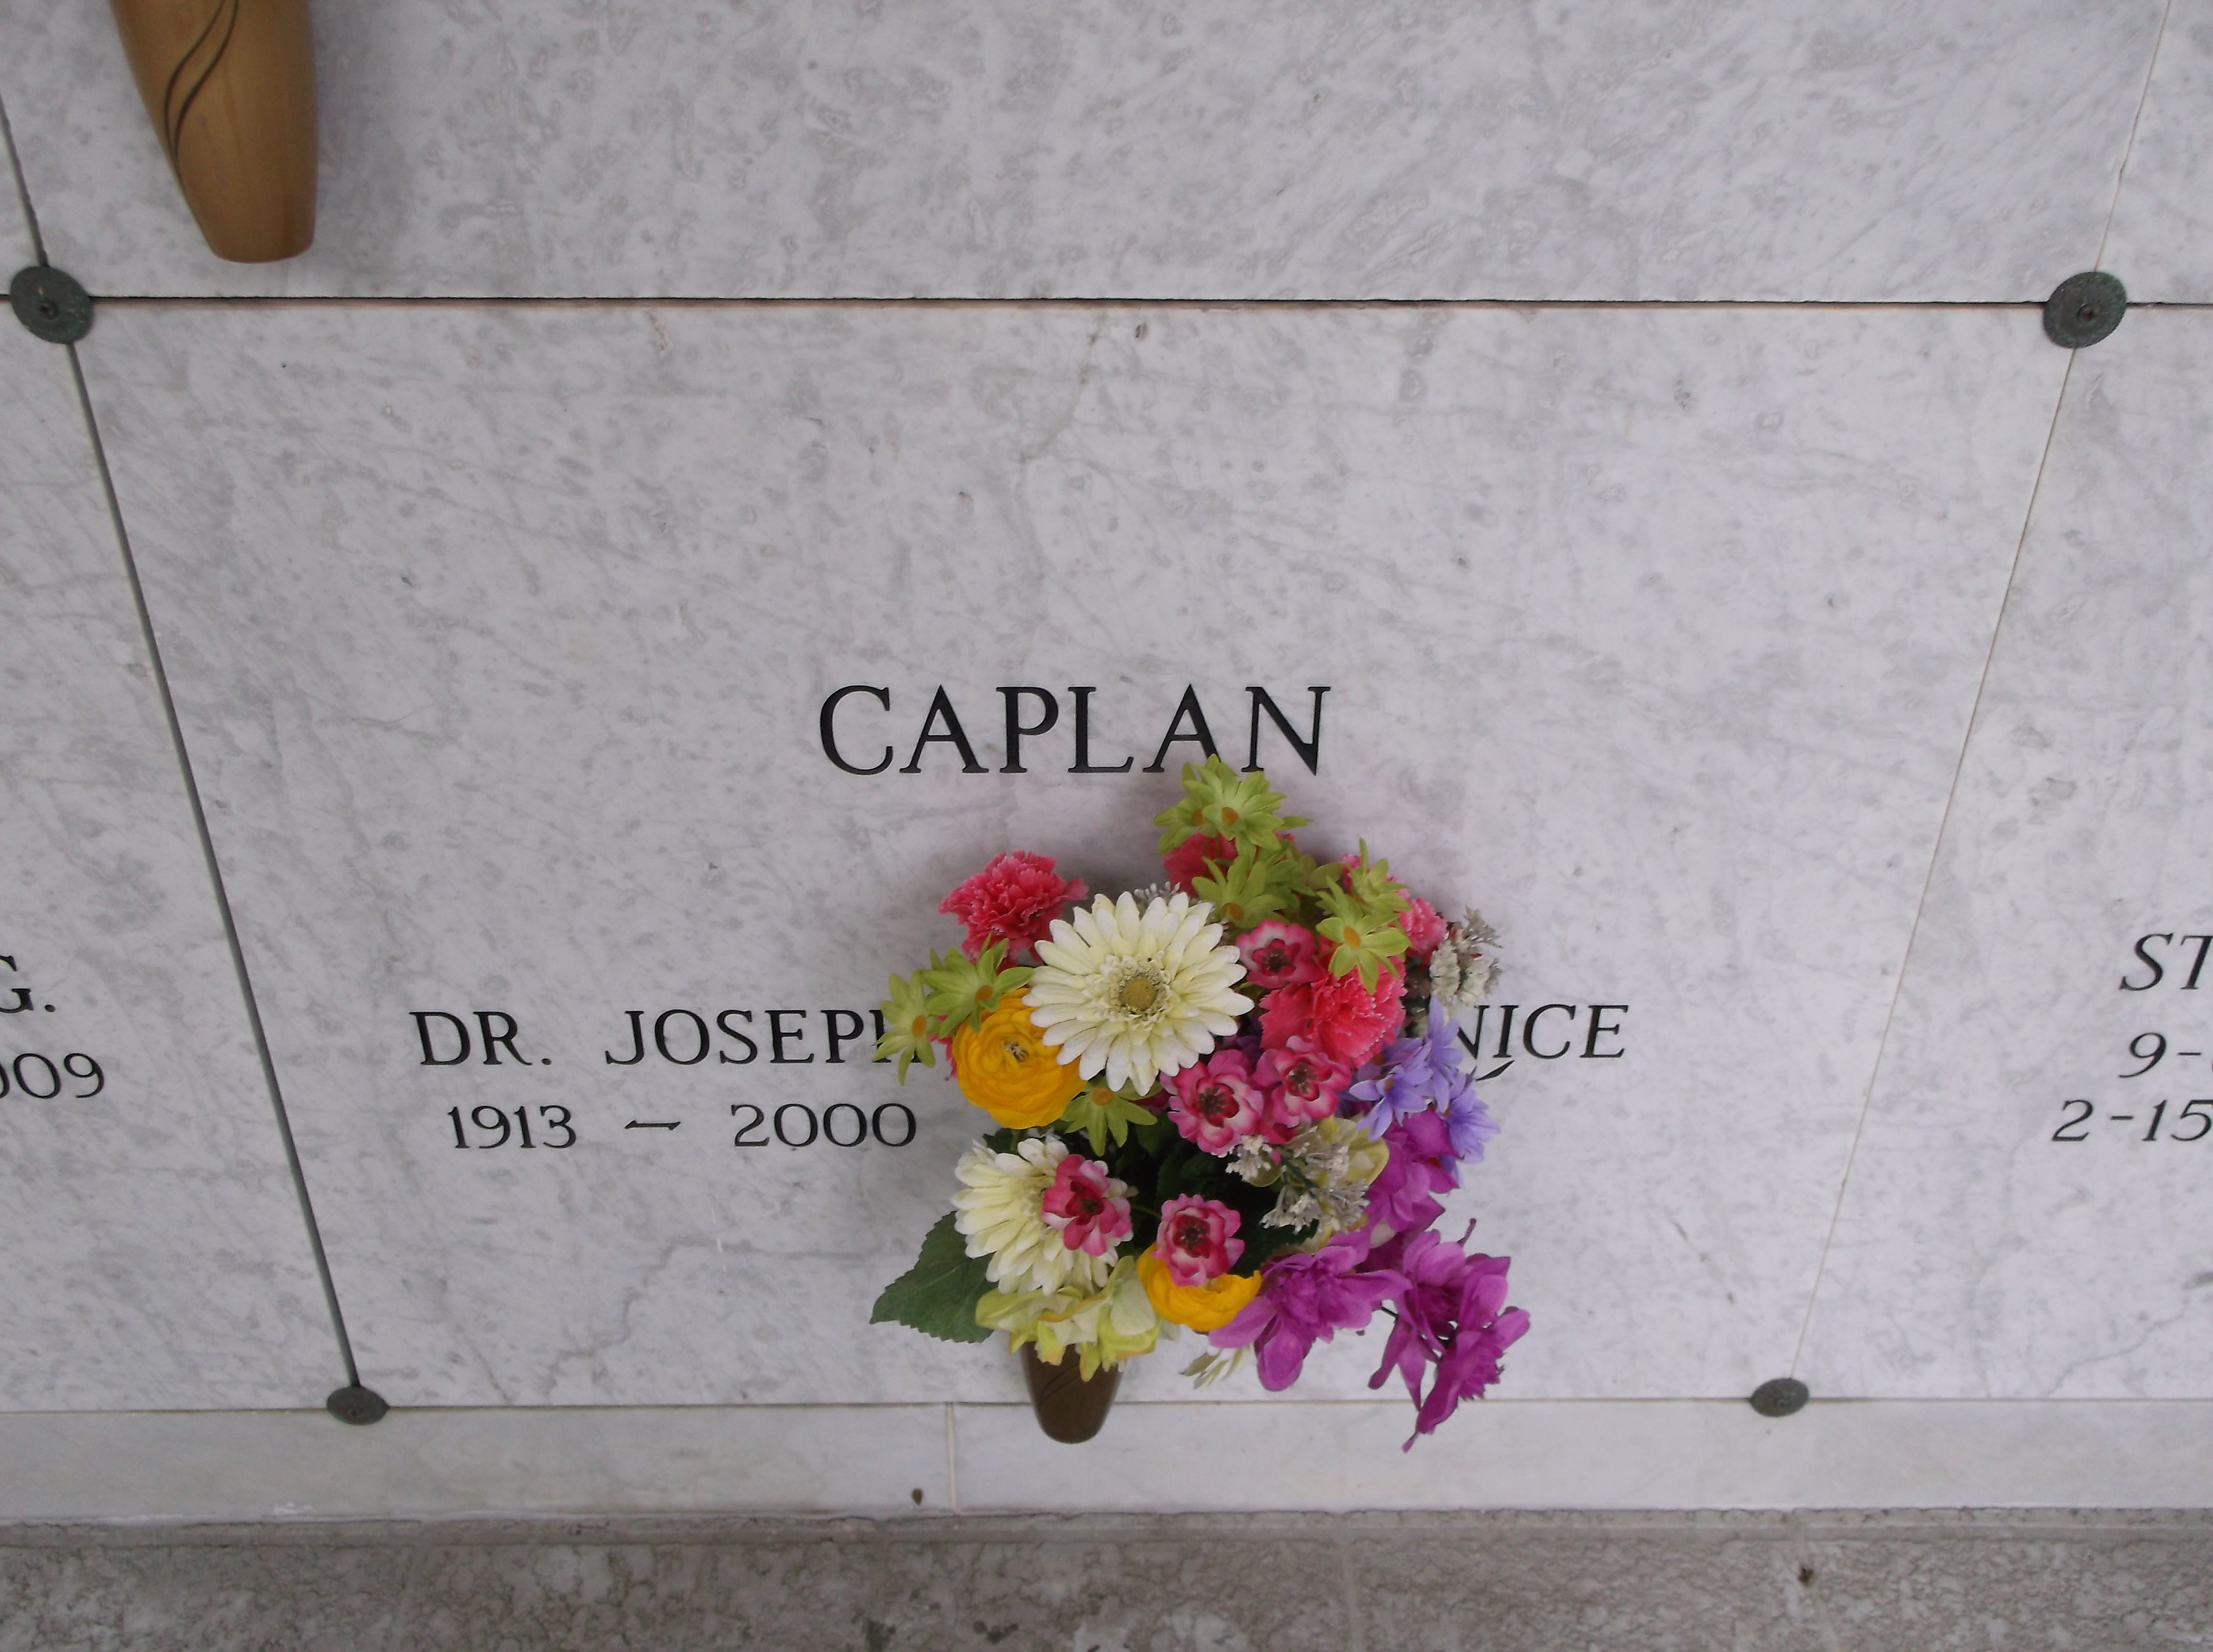 Dr Joseph Caplan